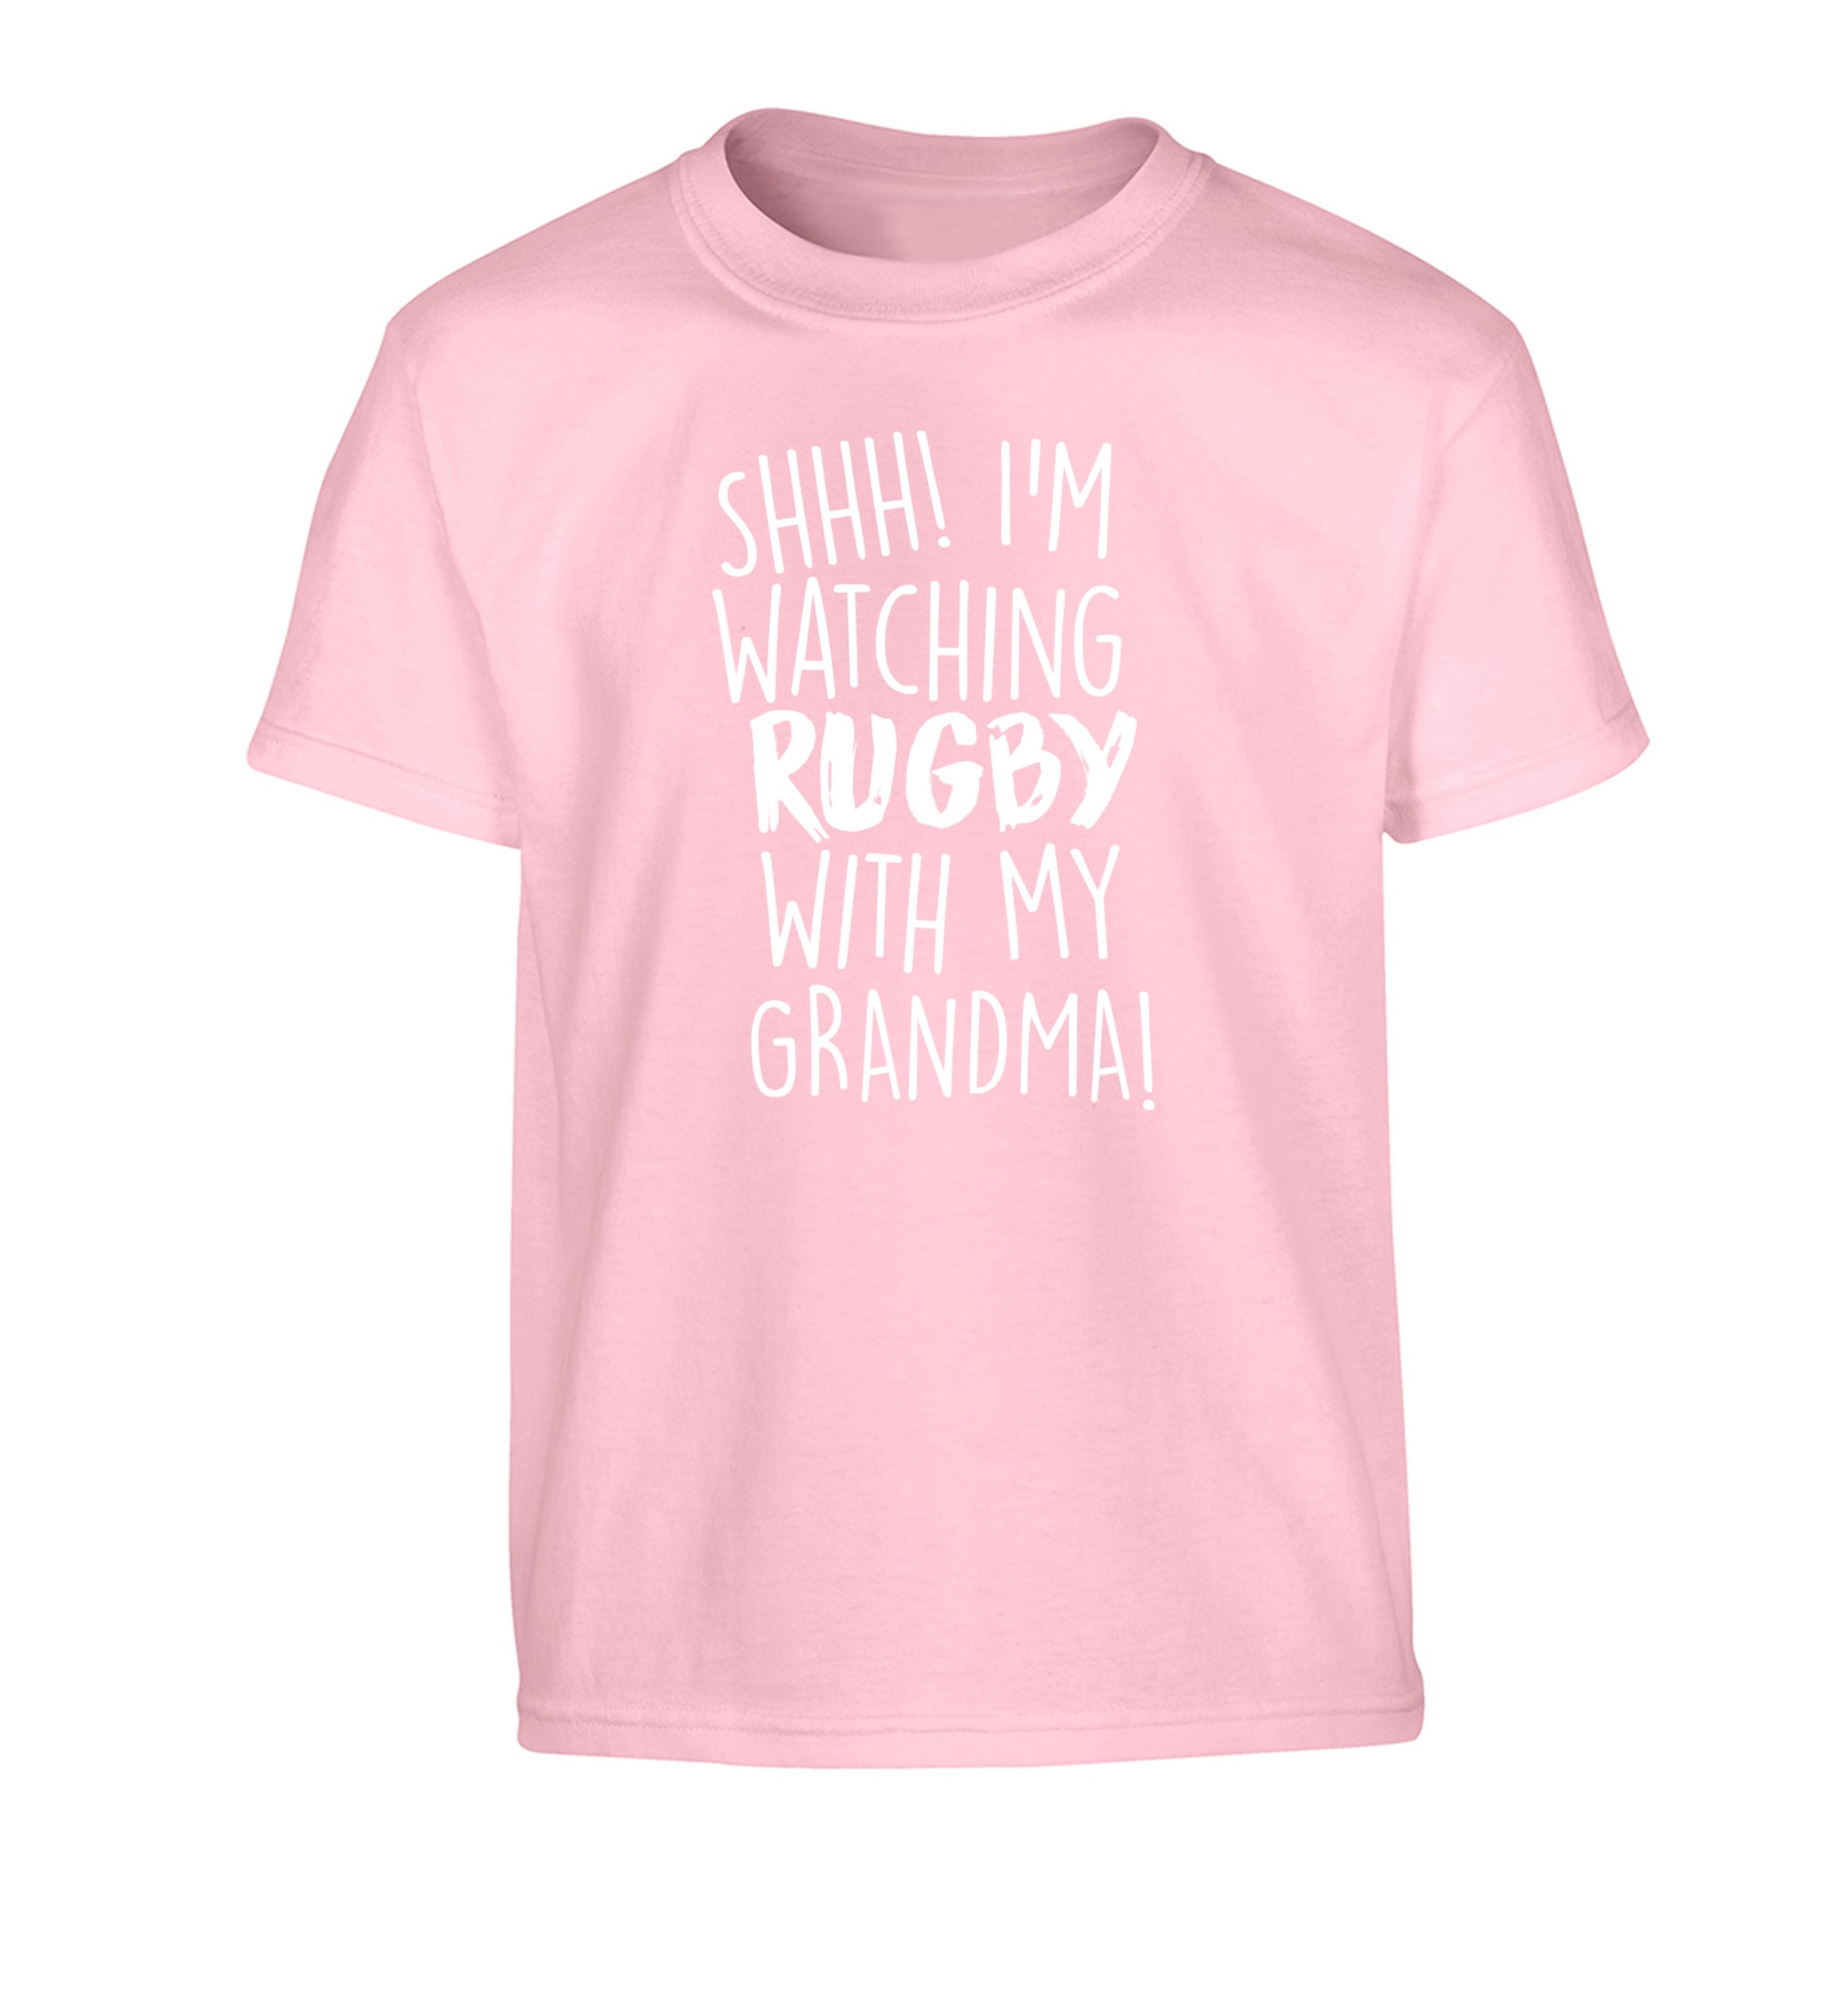 Shh I'm watching rugby with my grandma Children's light pink Tshirt 12-13 Years